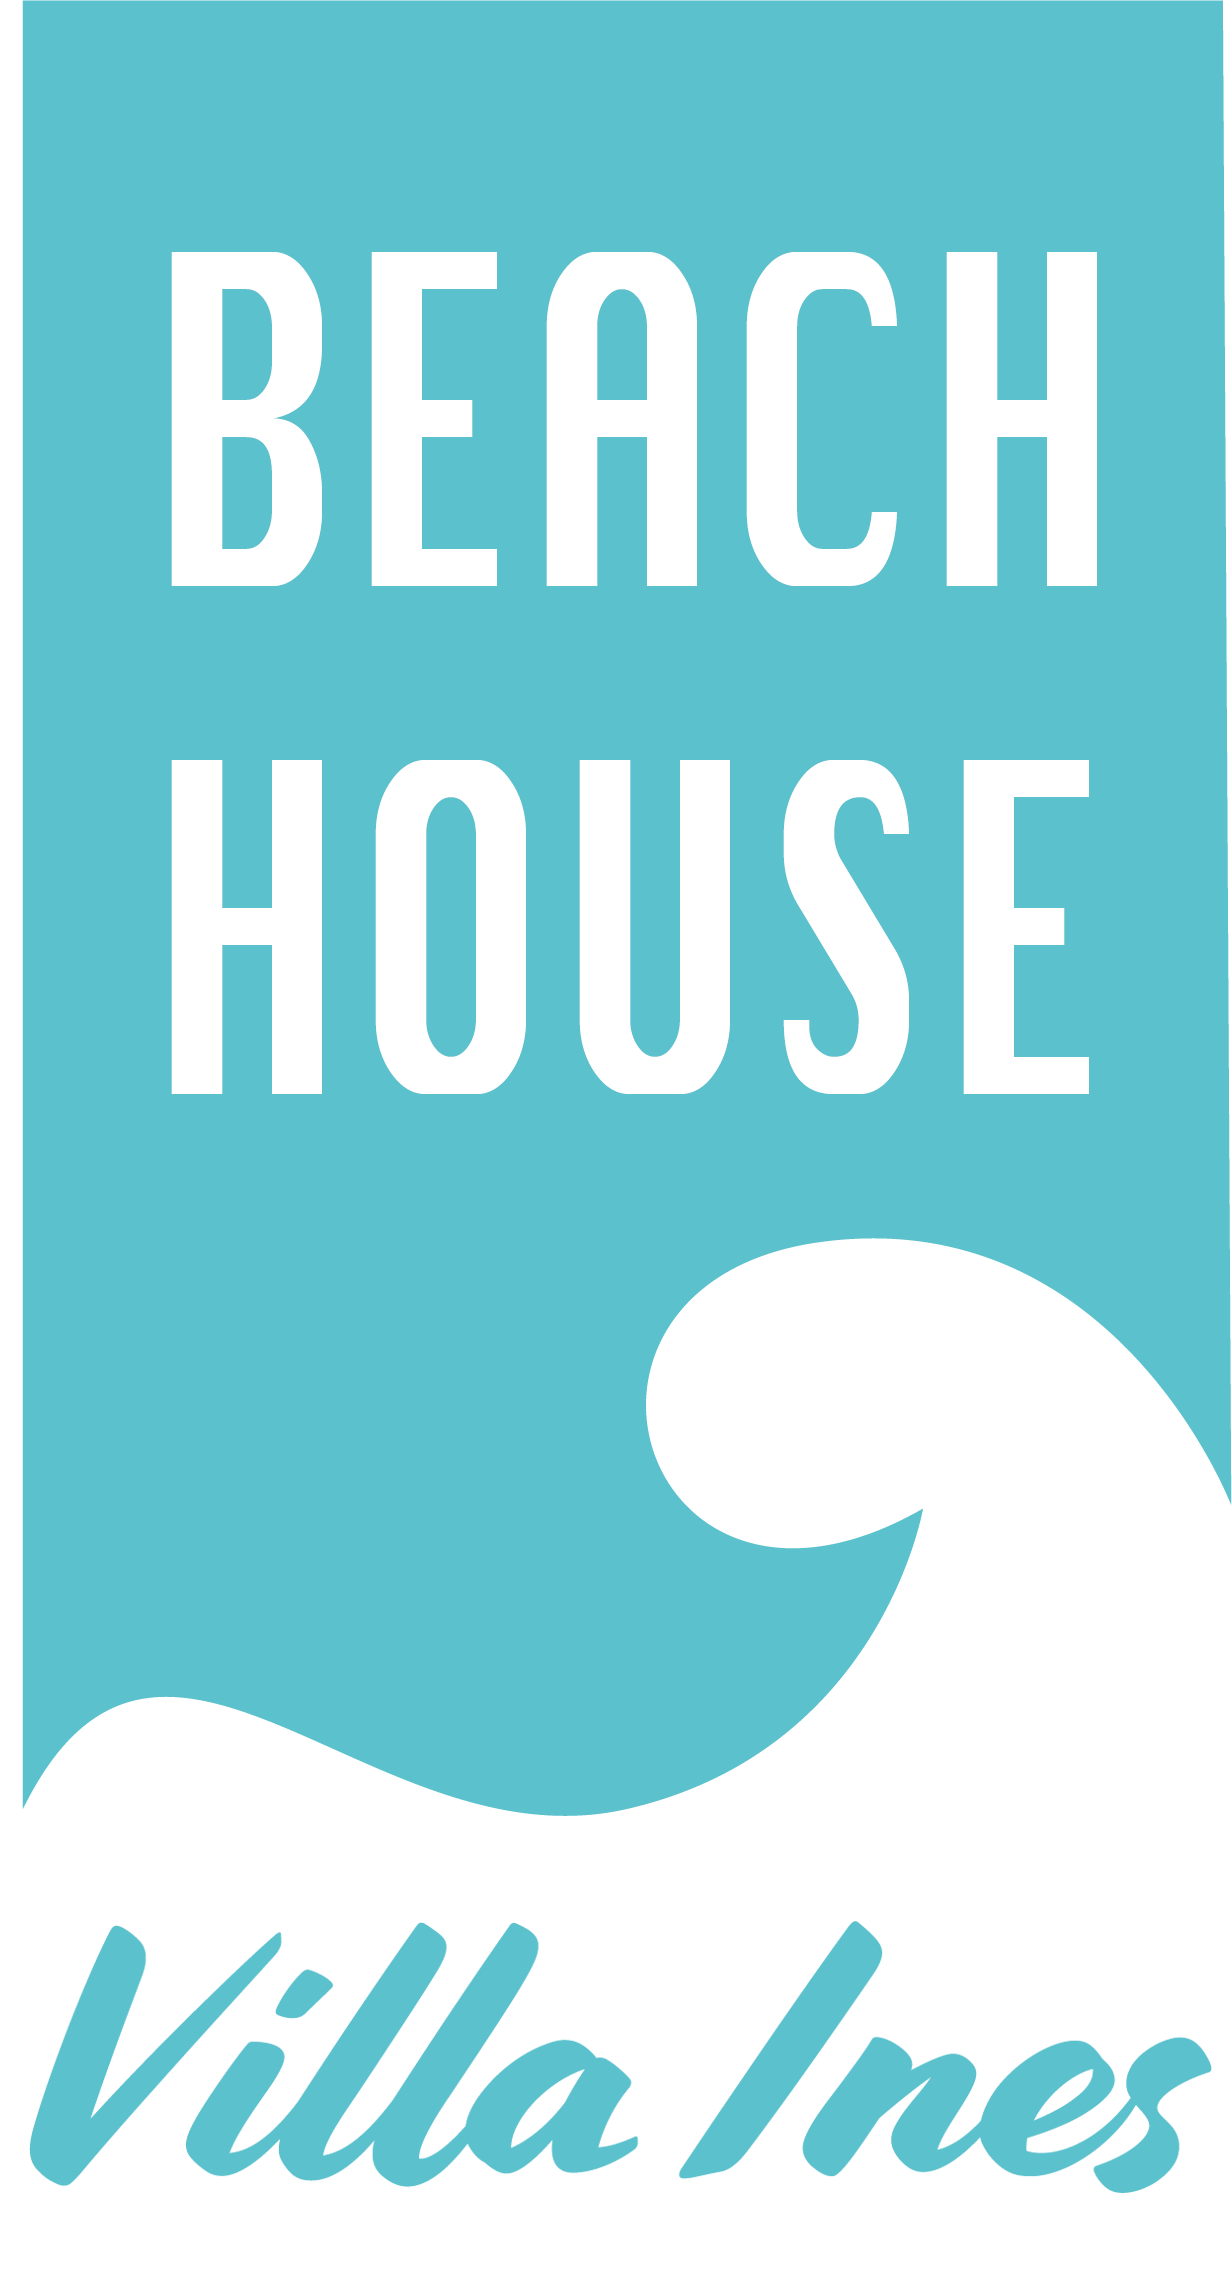 Beach-House-Villa-Ines-logo-web